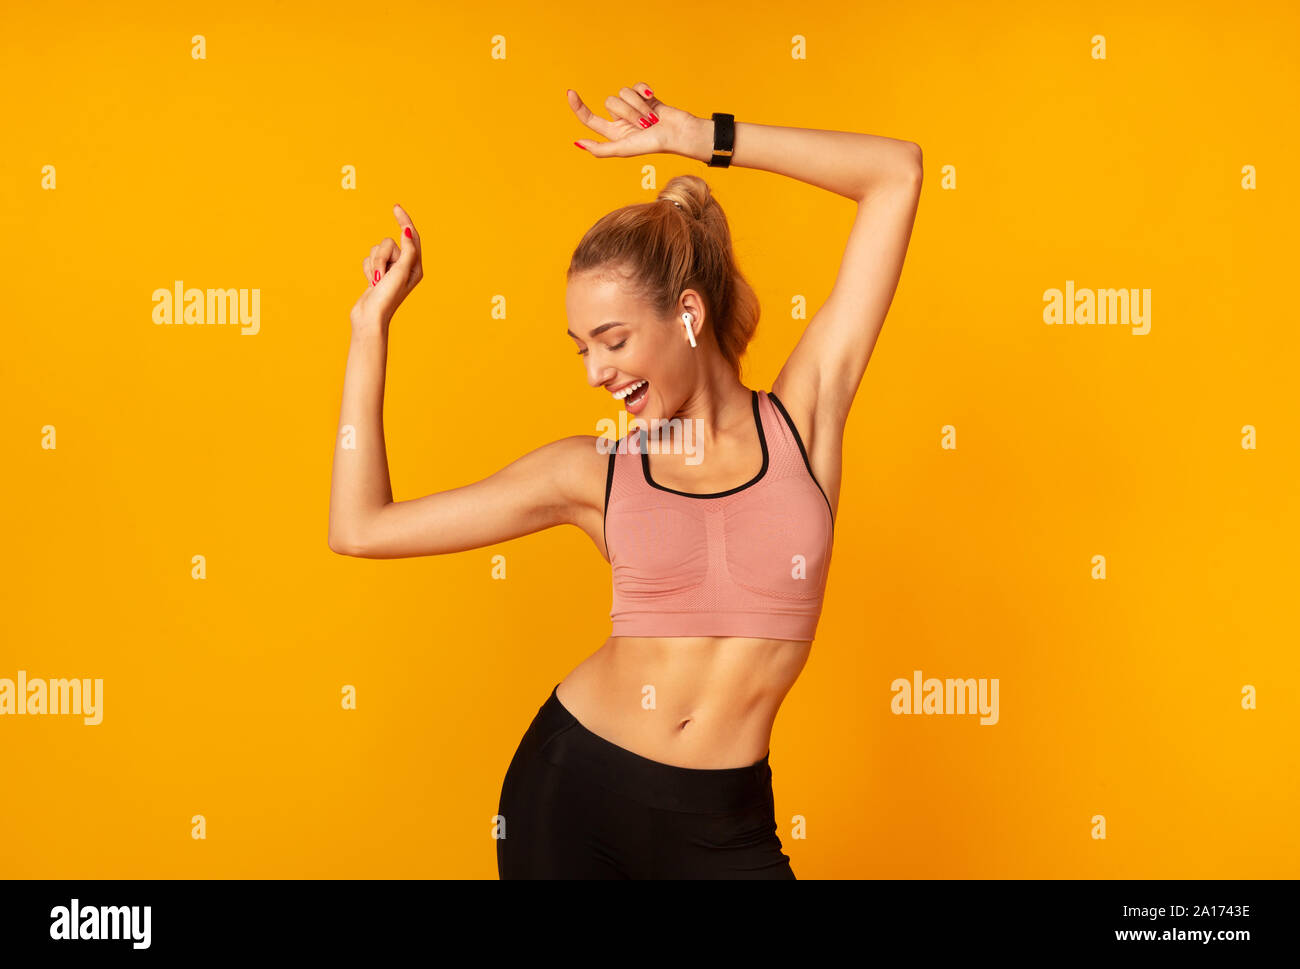 Woman In Wireless Earphones Dancing Listening To Music, Yellow Background Stock Photo